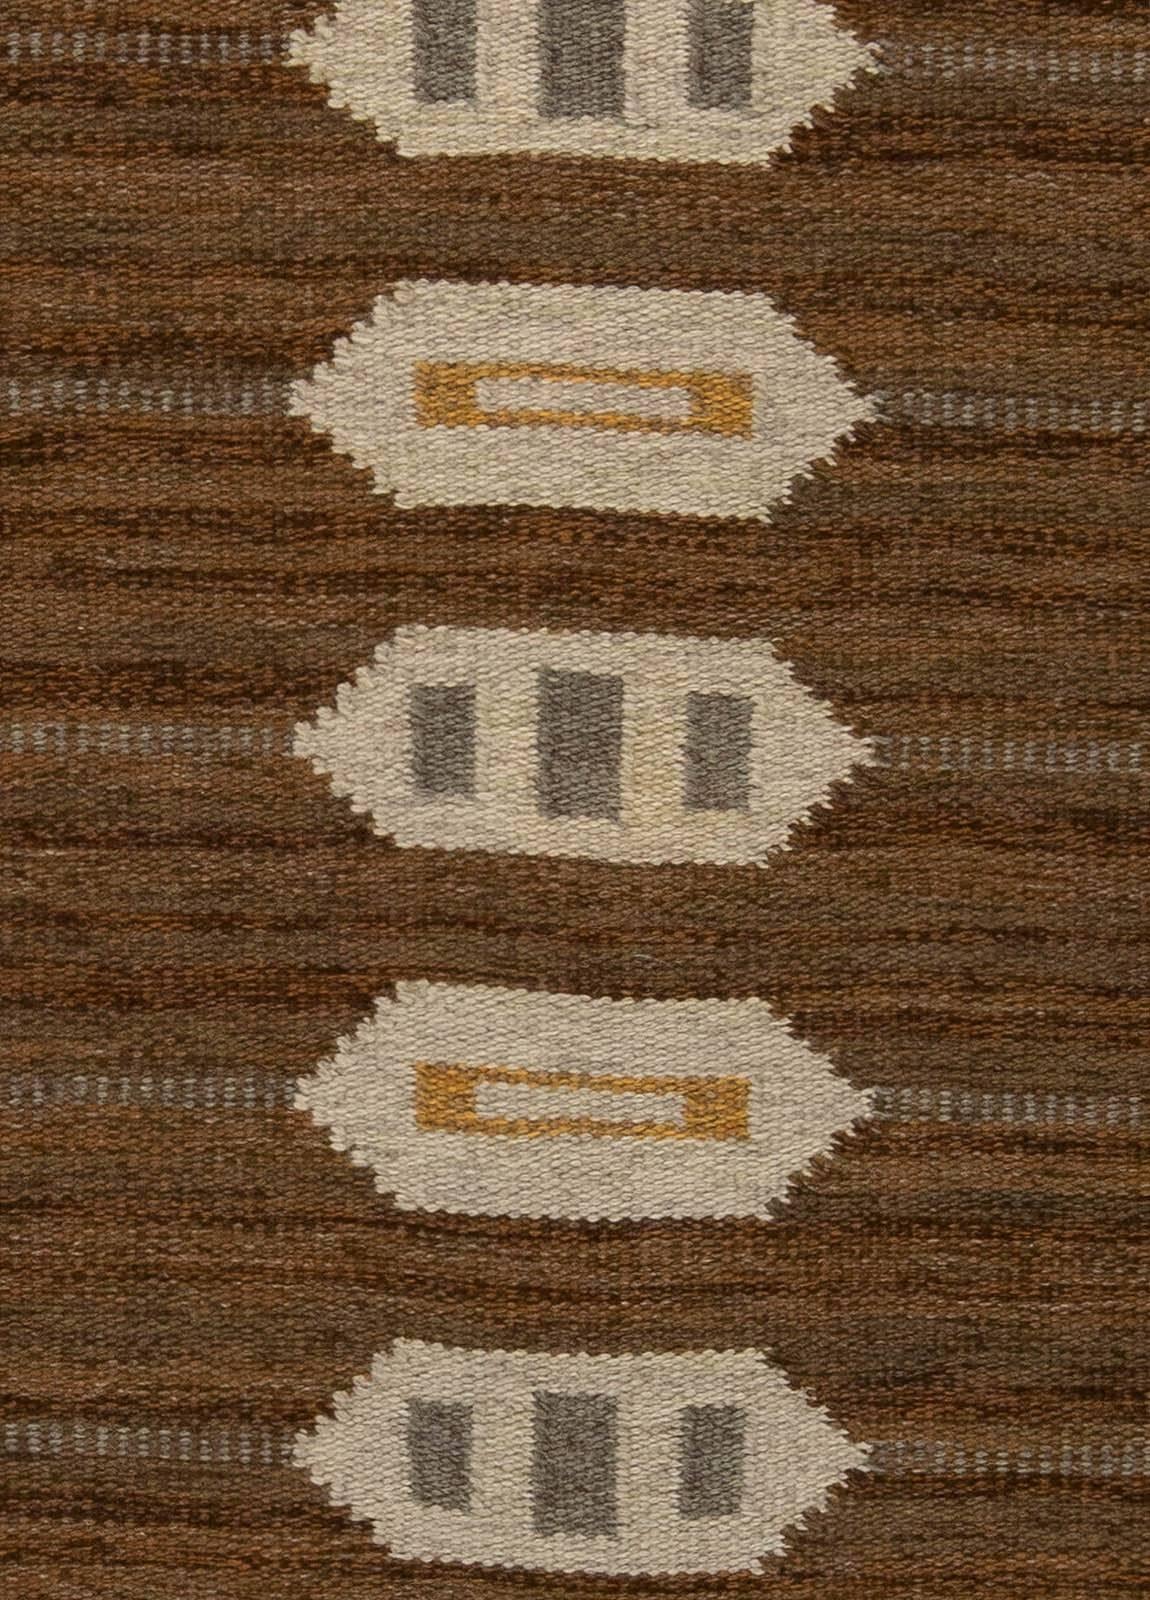 Mid-20th Century Swedish brown, gray, beige flat-woven wool rug
Size: 6'4